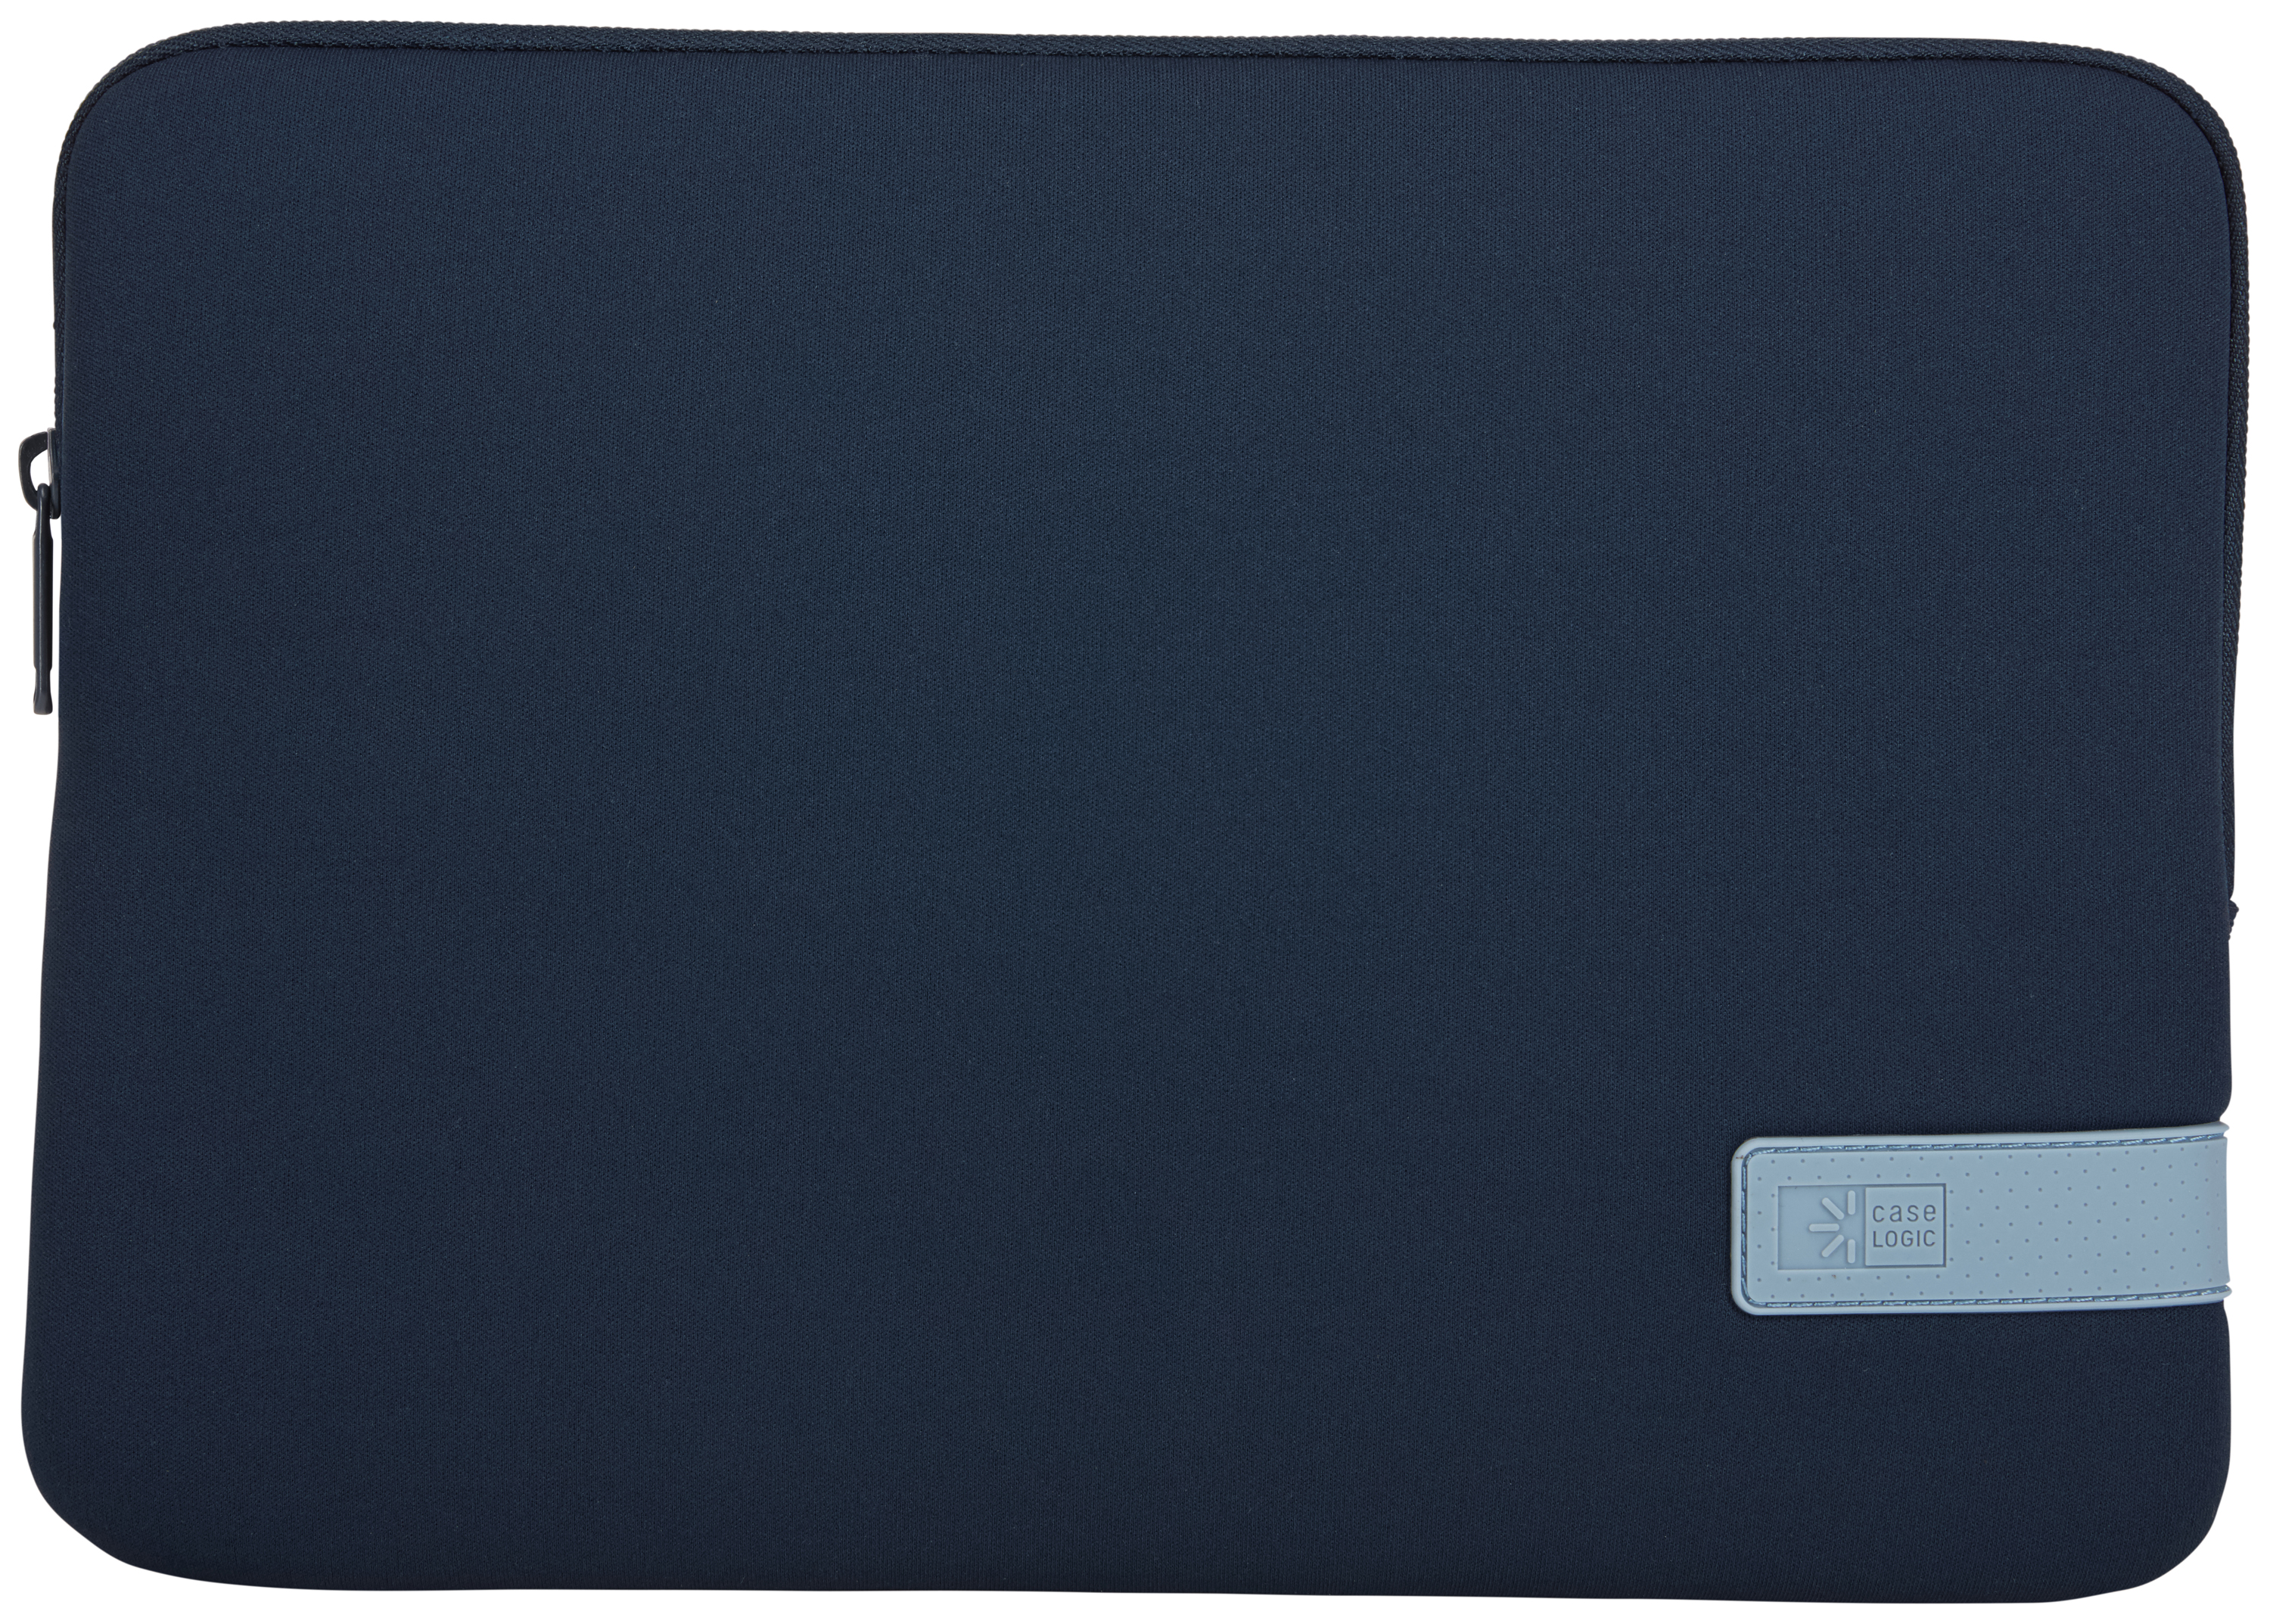 Case Logic Reflect MacBook Sleeve 13 REFMB-113 DARK BLUE (3203956)